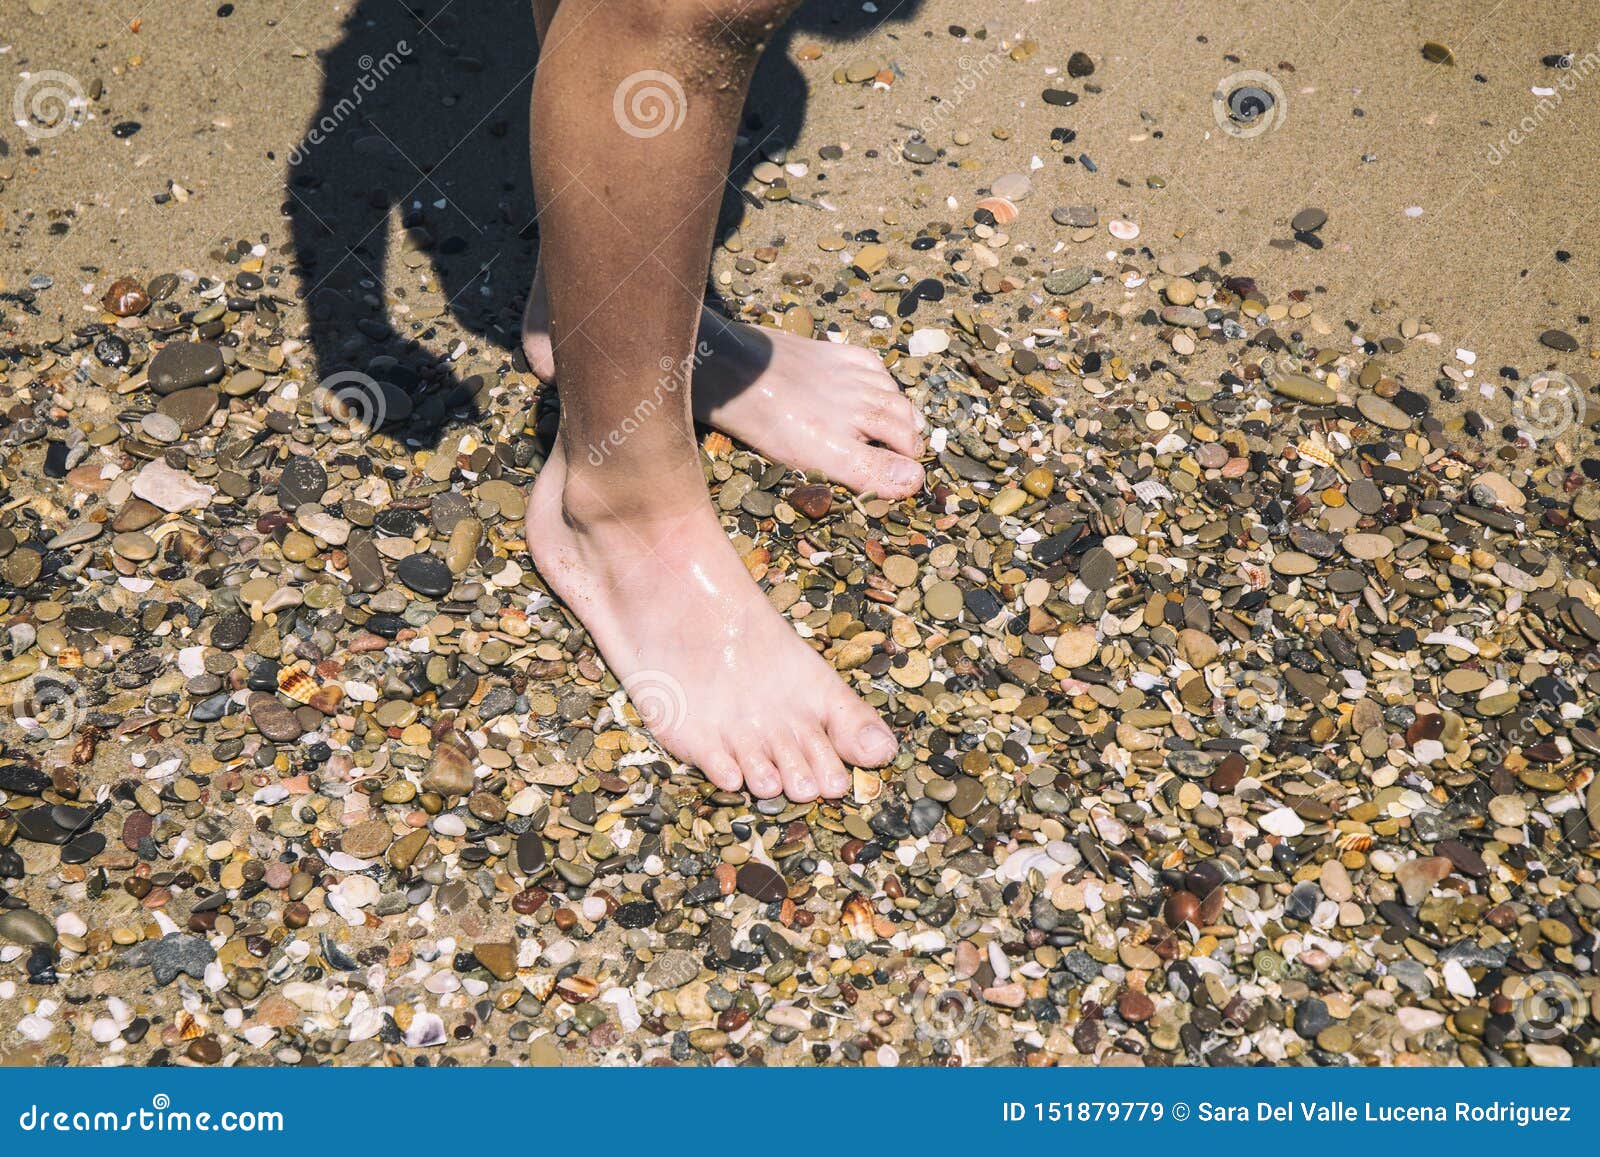 children`s feet walking on the stones along the beach